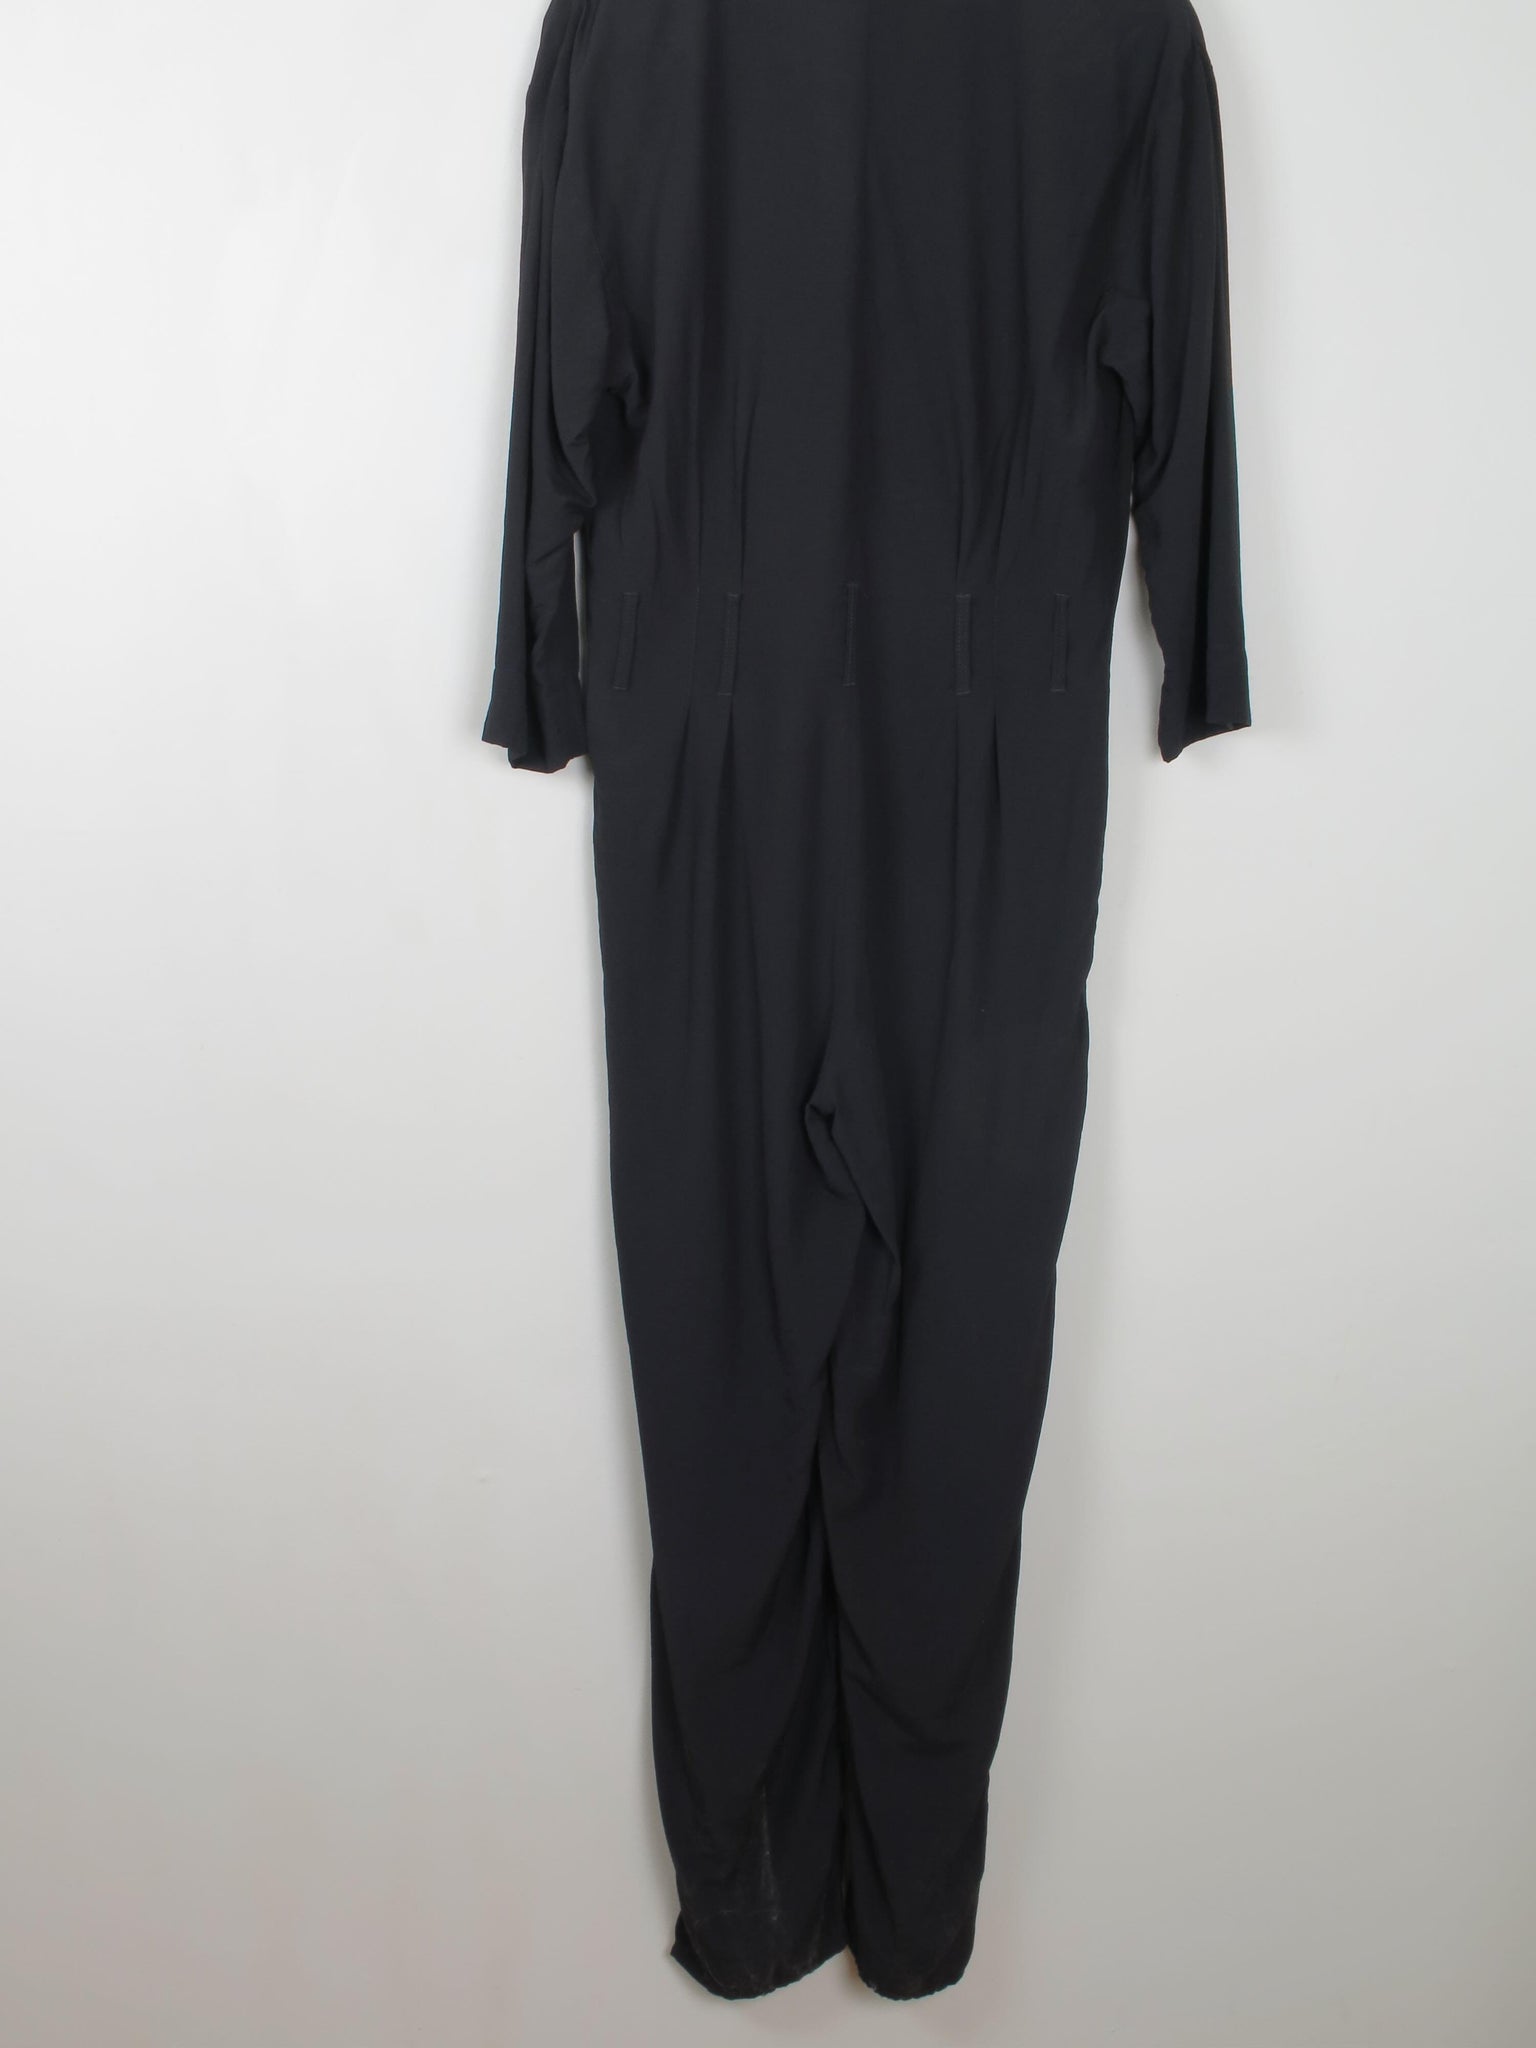 Women's Black Vintage Jumpsuit S - The Harlequin